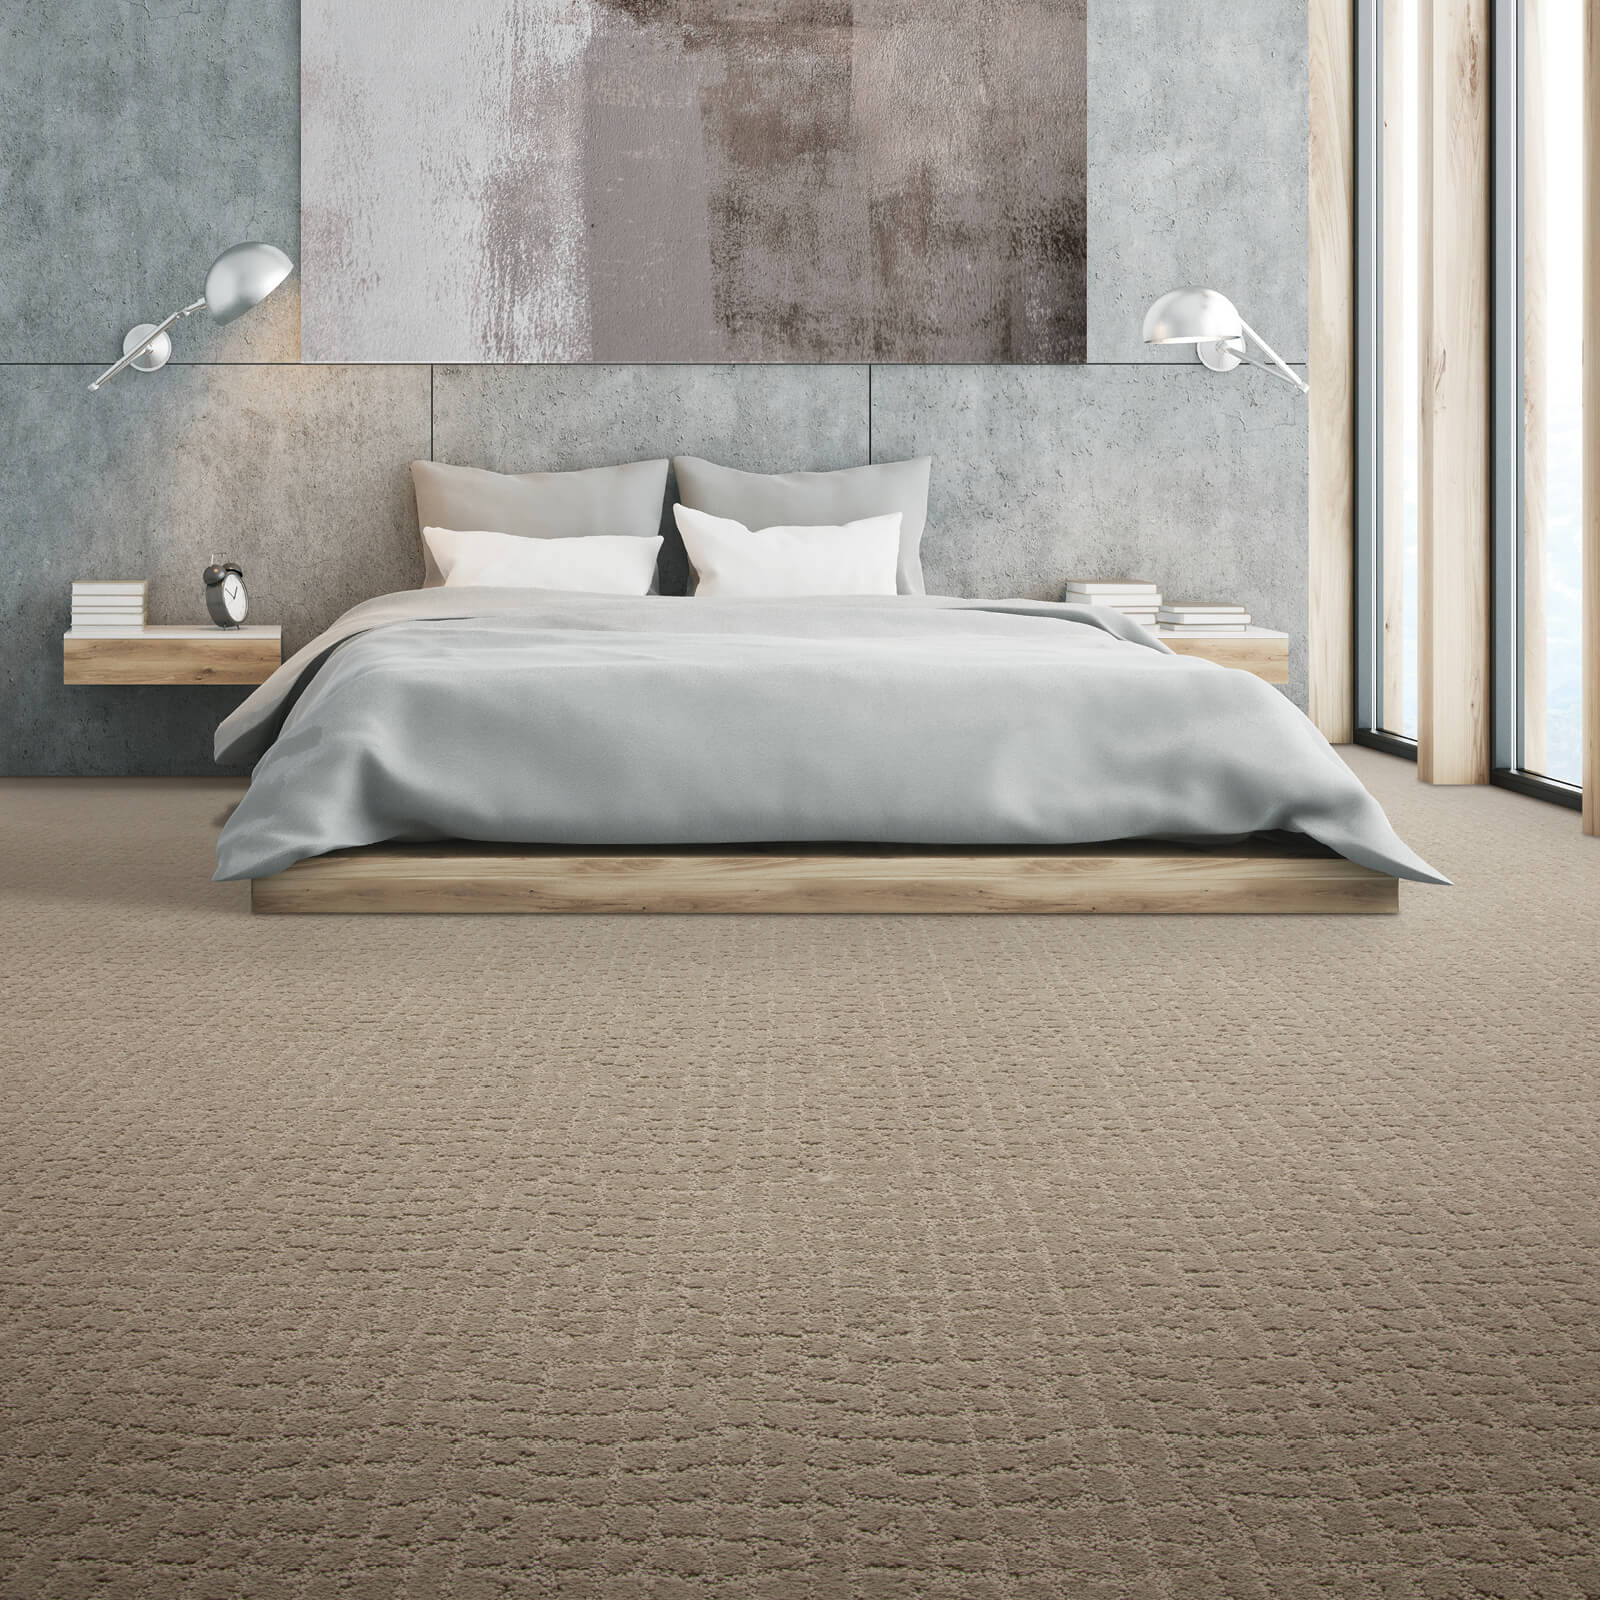 Carpeting in Bedroom | Rockwall Floor and Paint